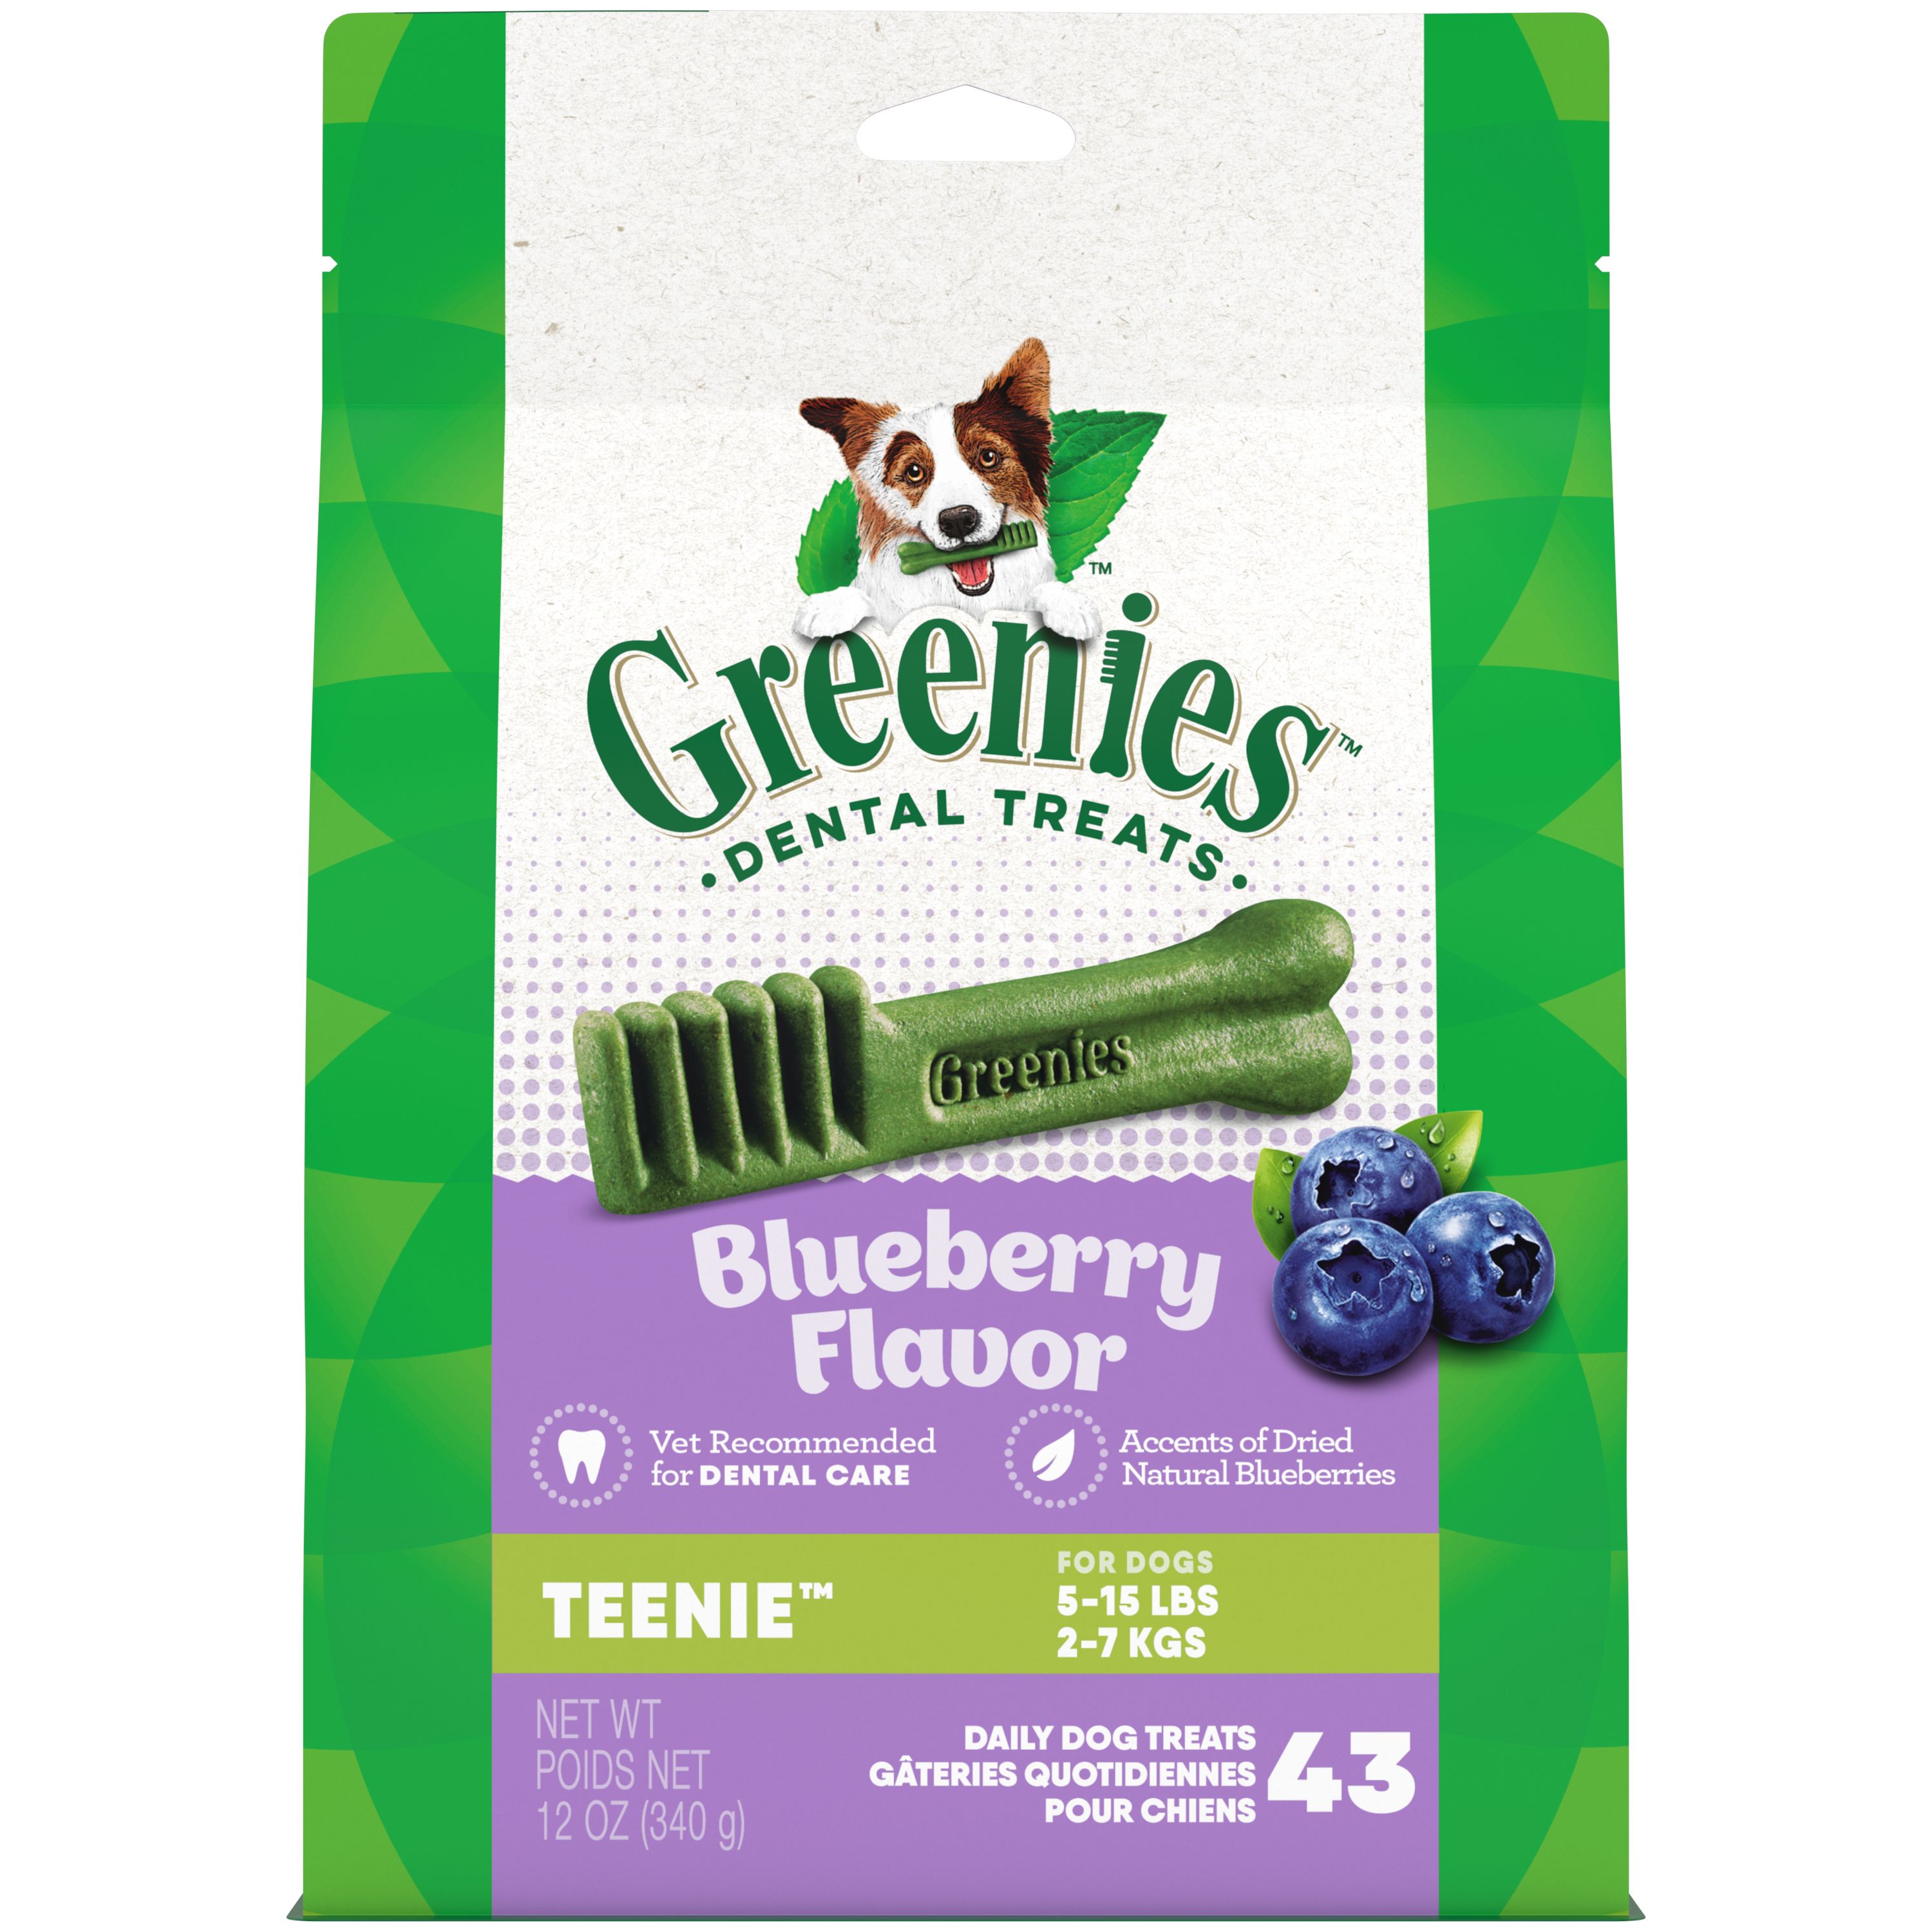 12 oz. Greenies Teenie Blueberry Treat Pack - Health/First Aid